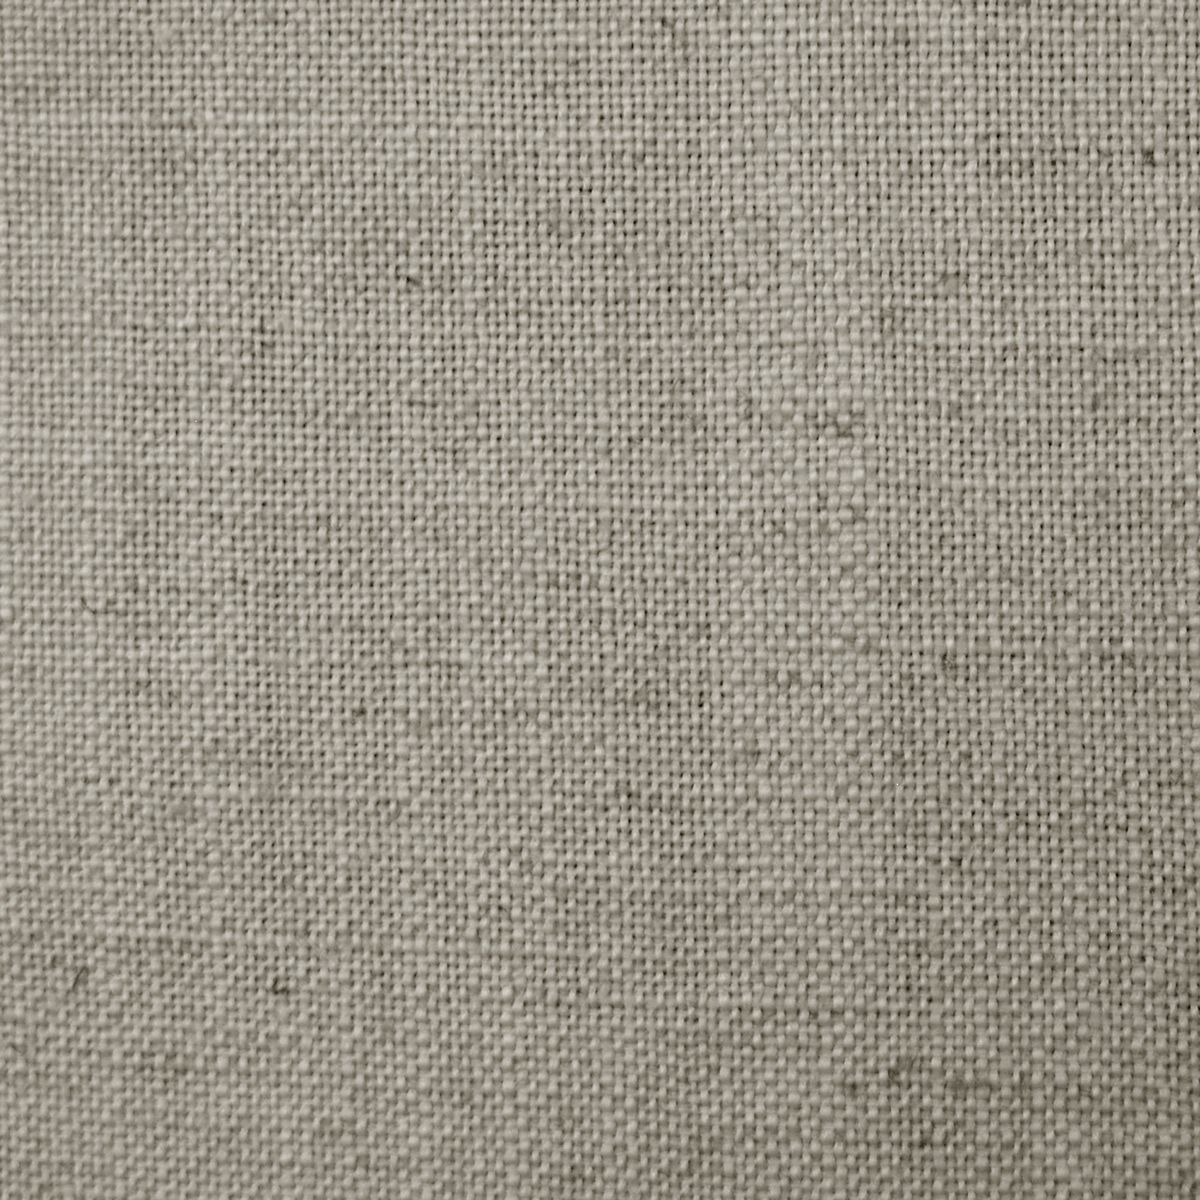 Hawley Birch Fabric by Voyage Maison